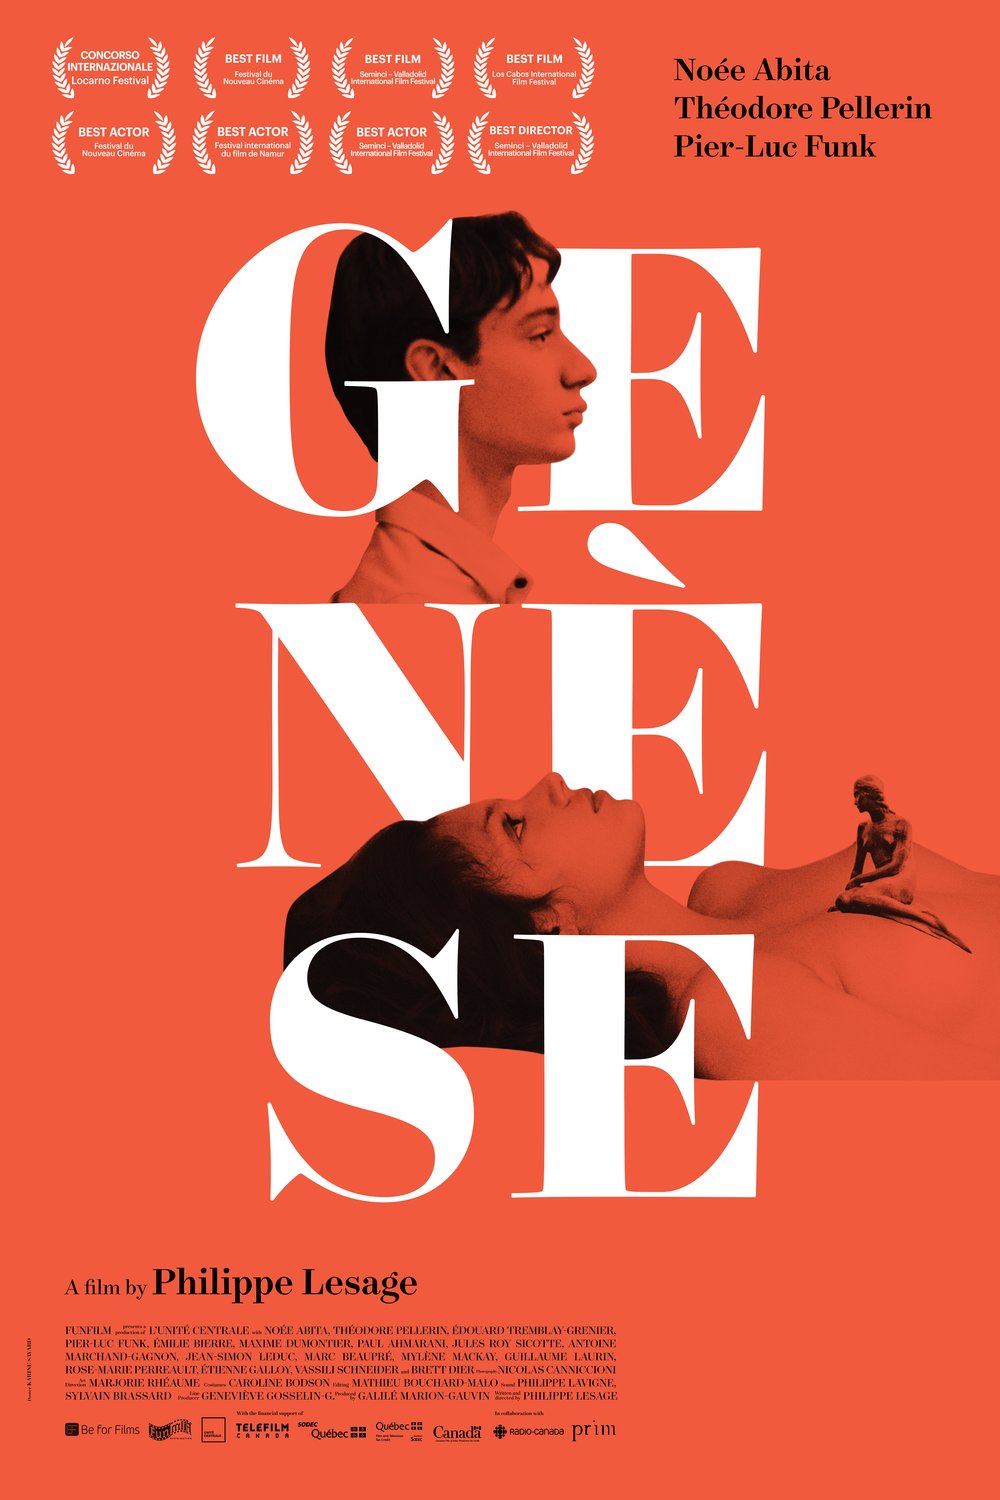 Poster of the movie Genesis